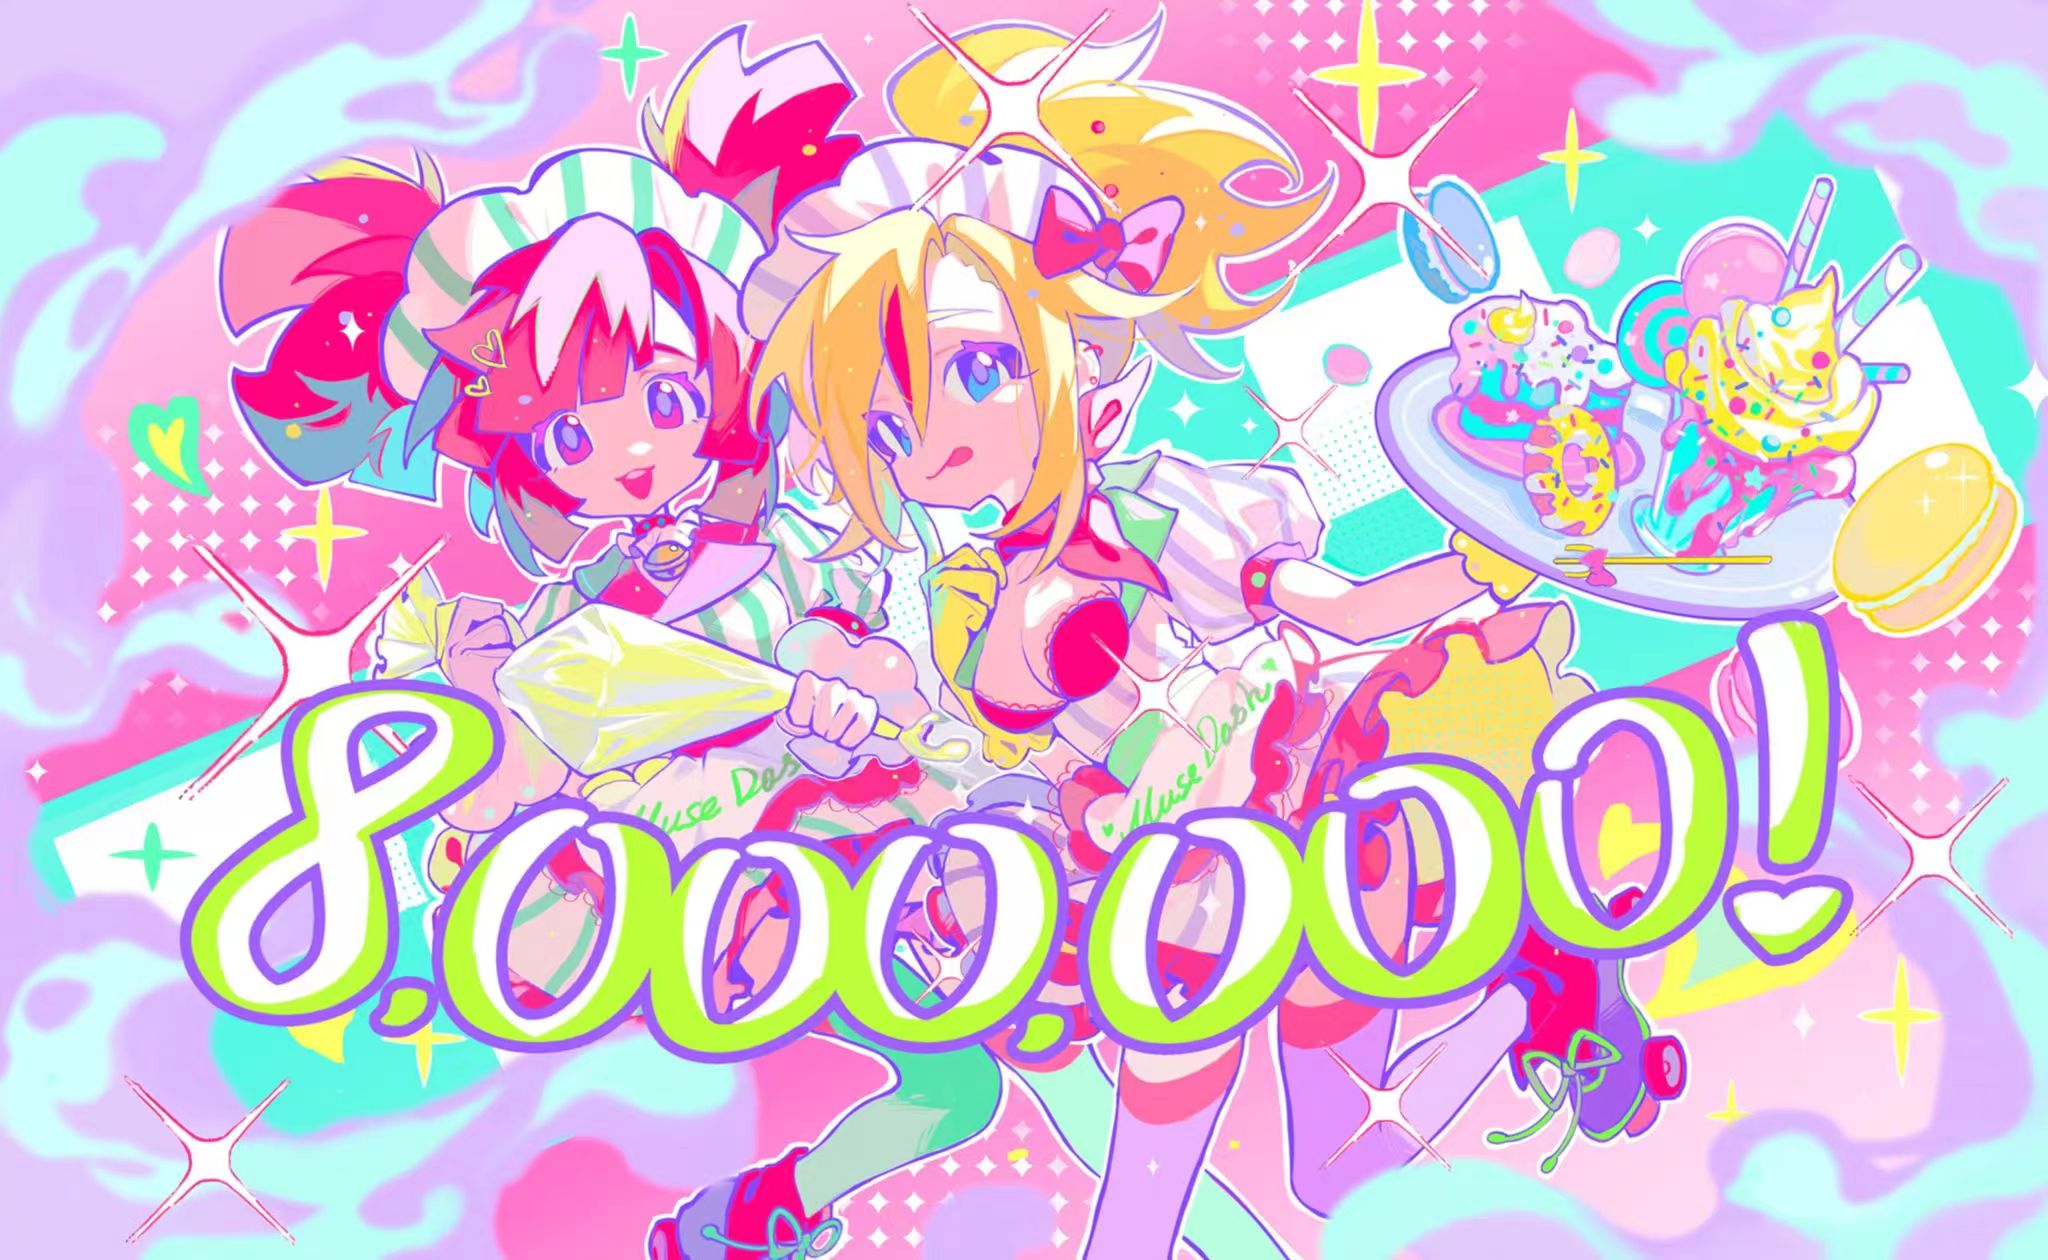 Anime 2048x1260 MuseDash buro marija anime girls colorful maid maid outfit sweets tongue out bow tie Macaron  donut lollipop stars heart